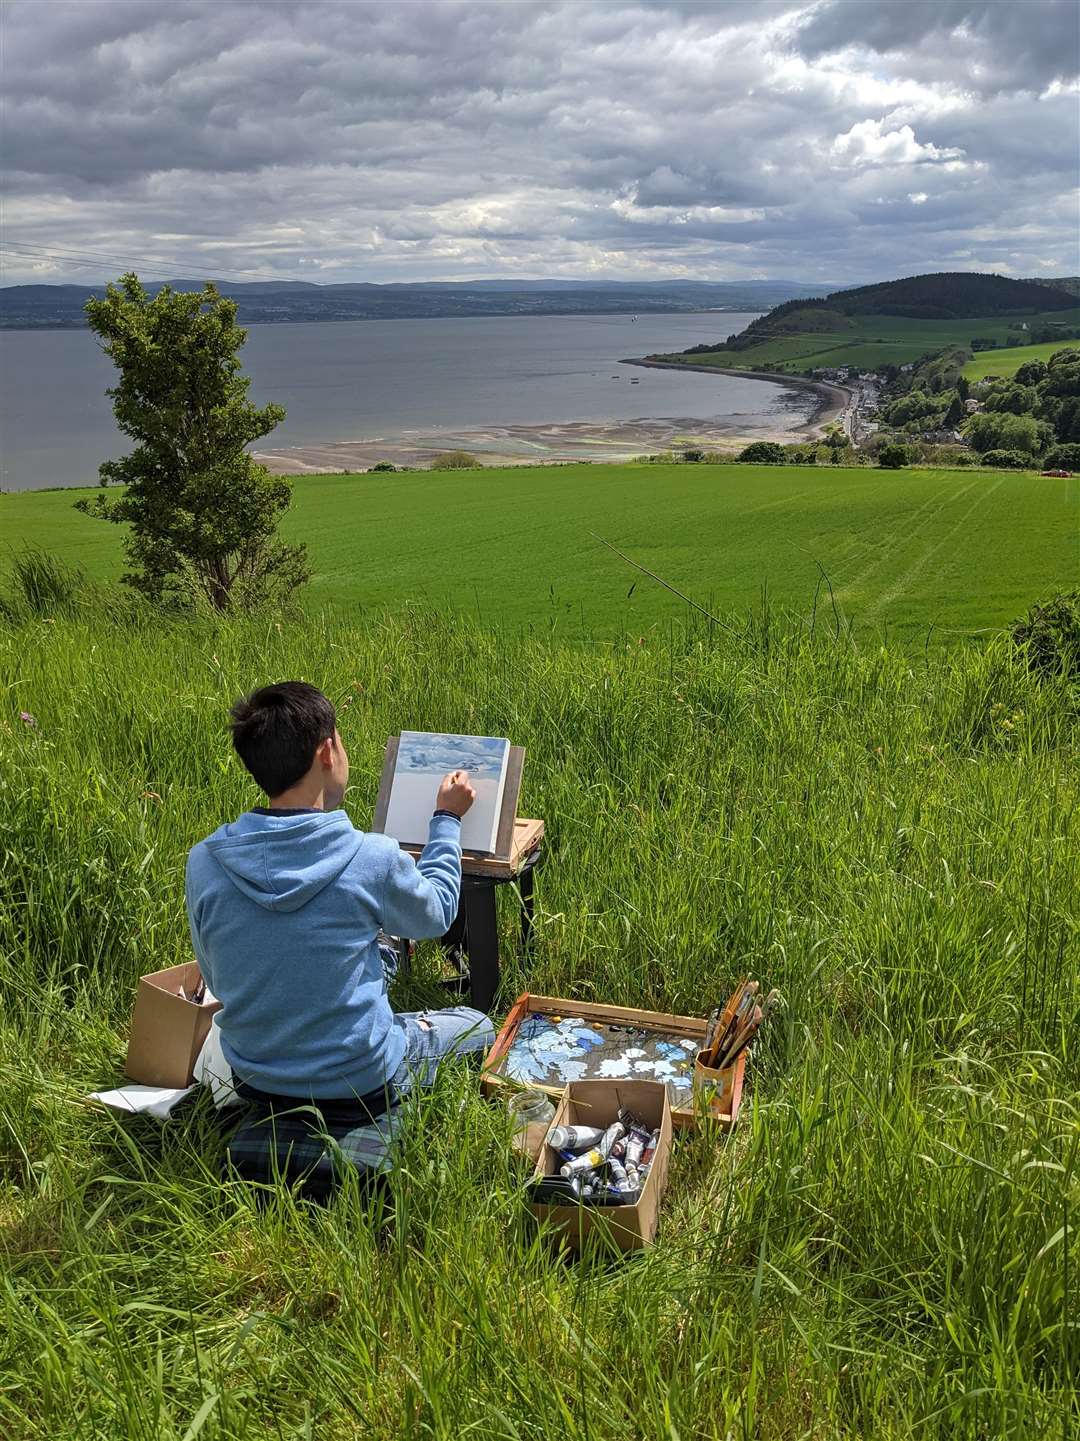 Tuan Nguyen paints a landscape near his home on the Black Isle.